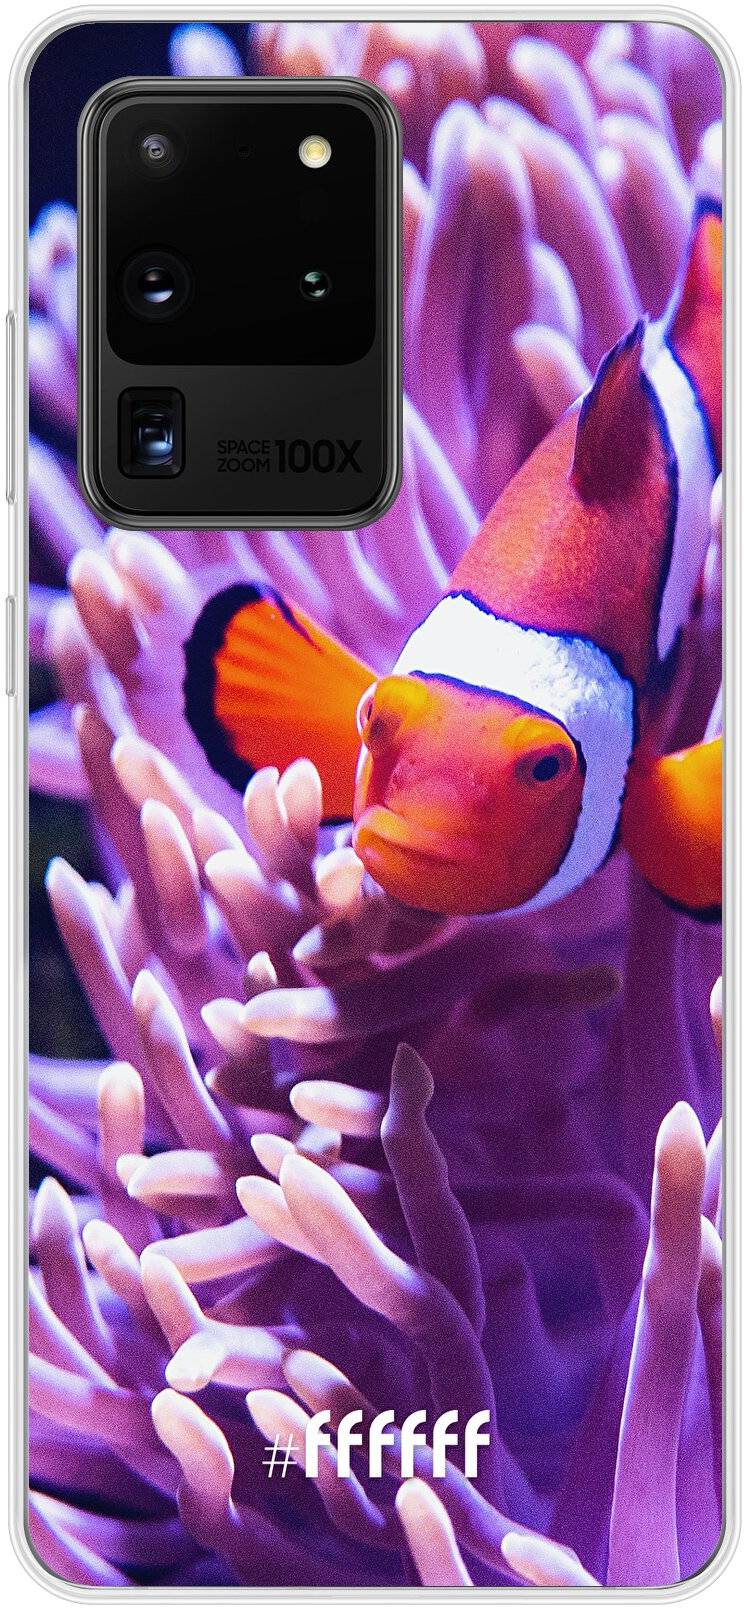 Nemo Galaxy S20 Ultra